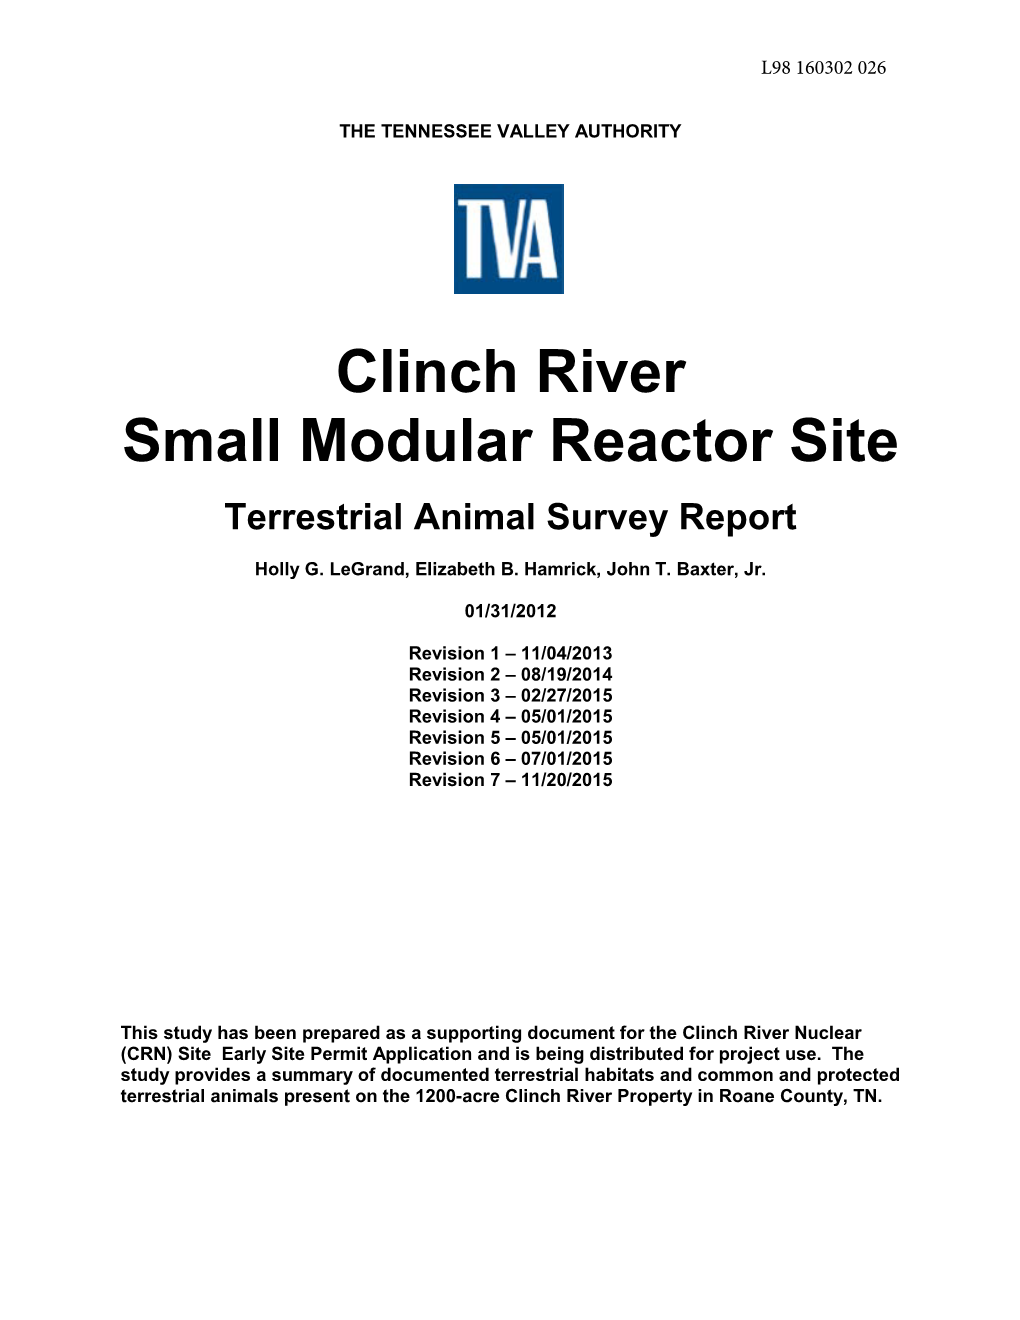 Clinch River Small Modular Reactor Site Terrestrial Animal Survey Report